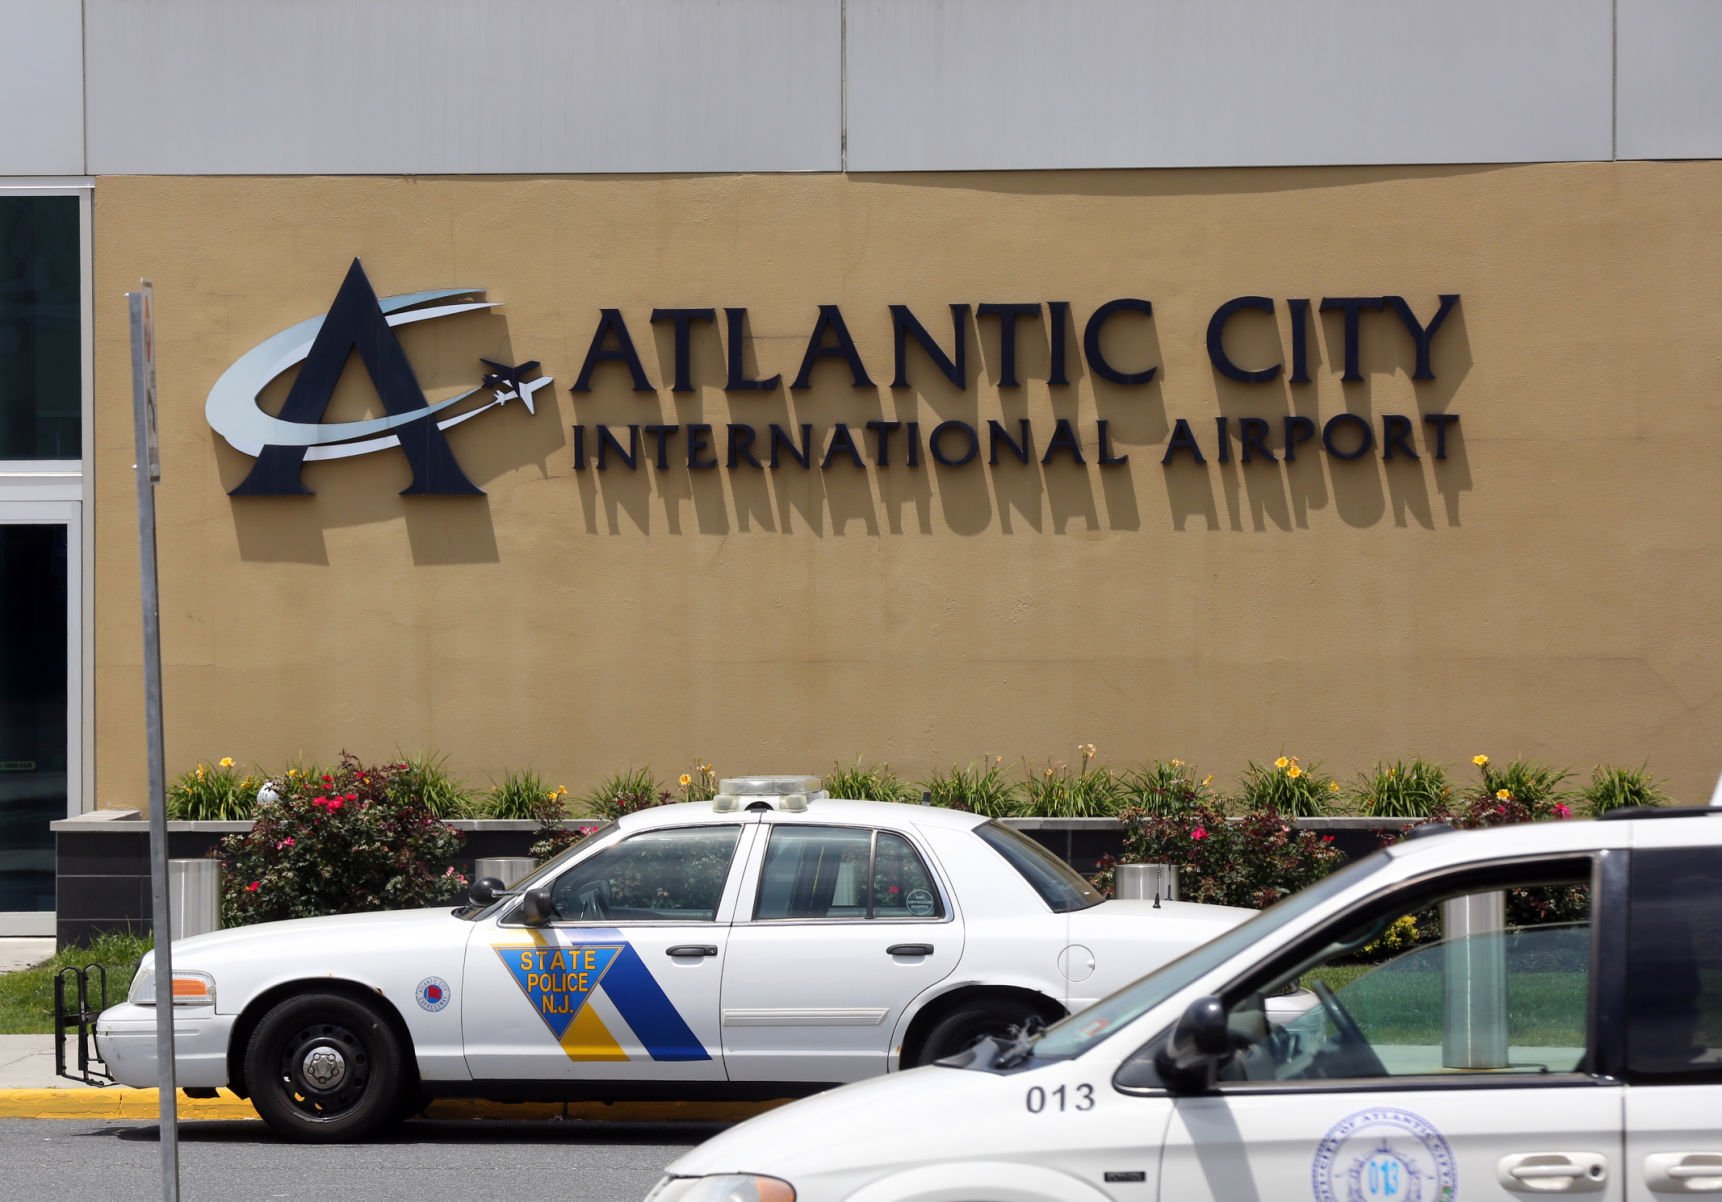 atlantic city airport address